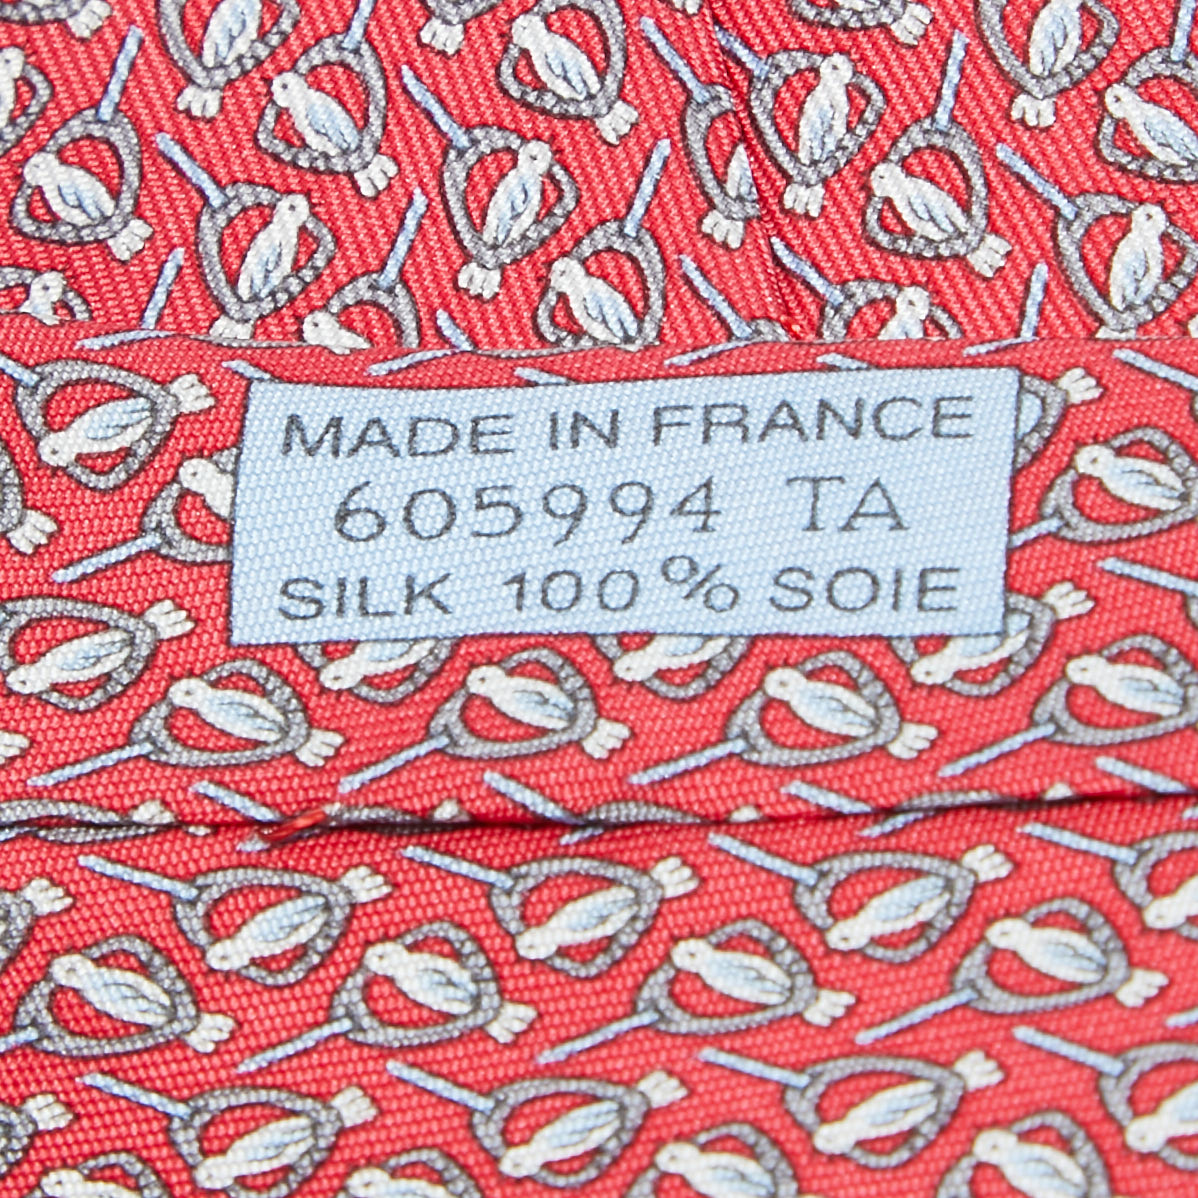 Hermès Red Birds Print Silk Tie